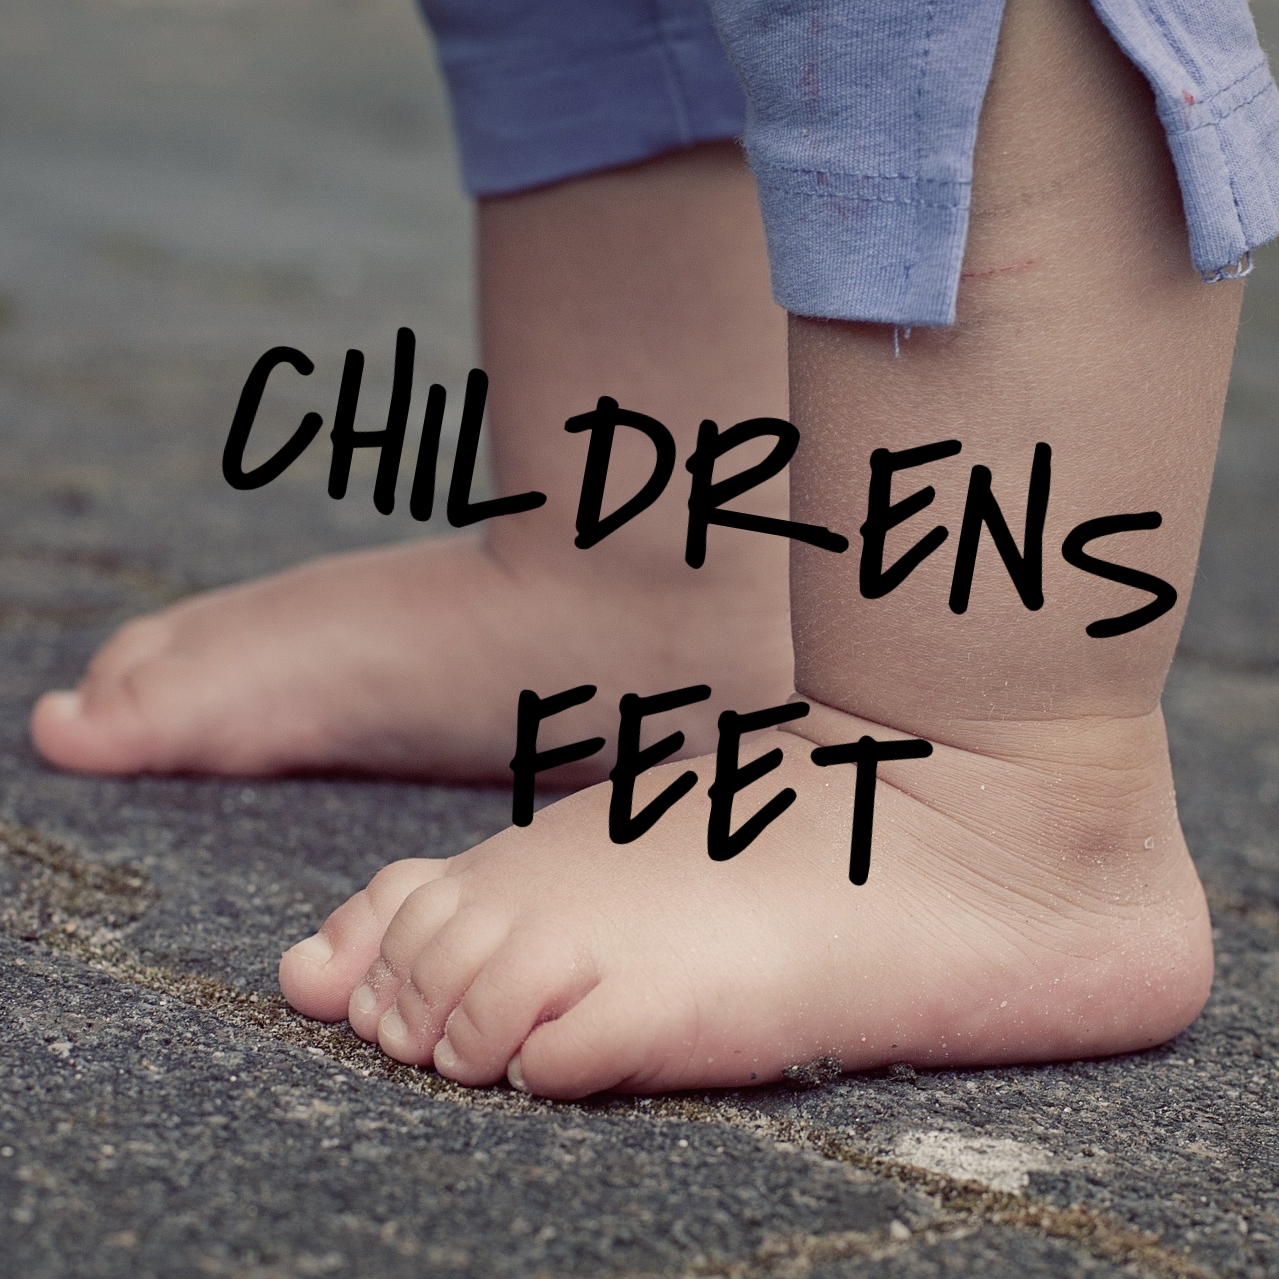 Childrens Feet